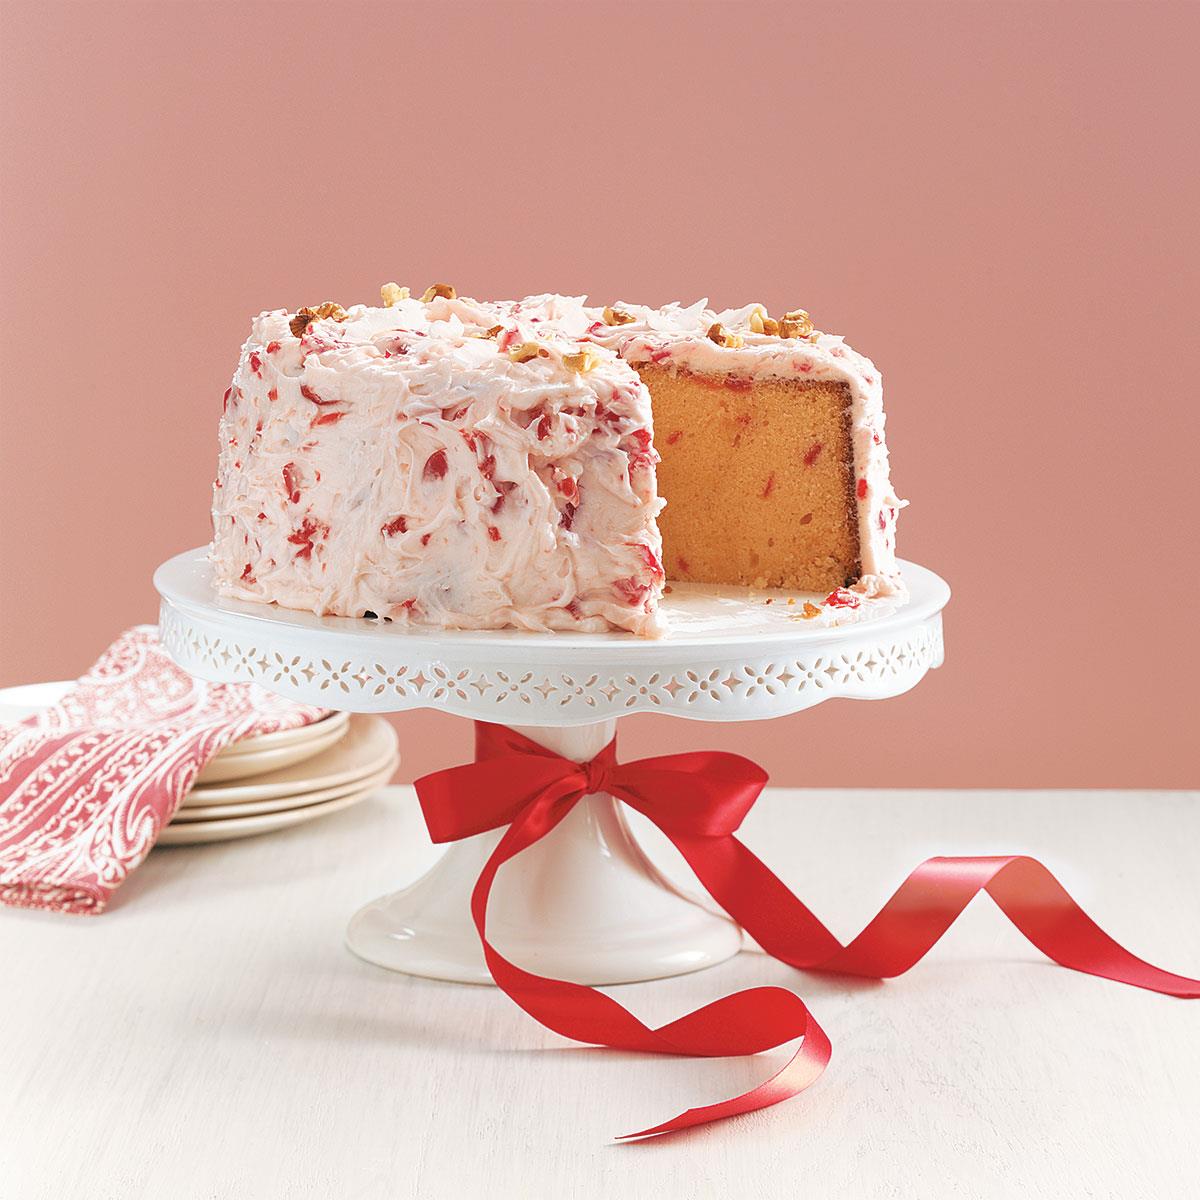 Cherry Pound Cake Recipe: How to Make It